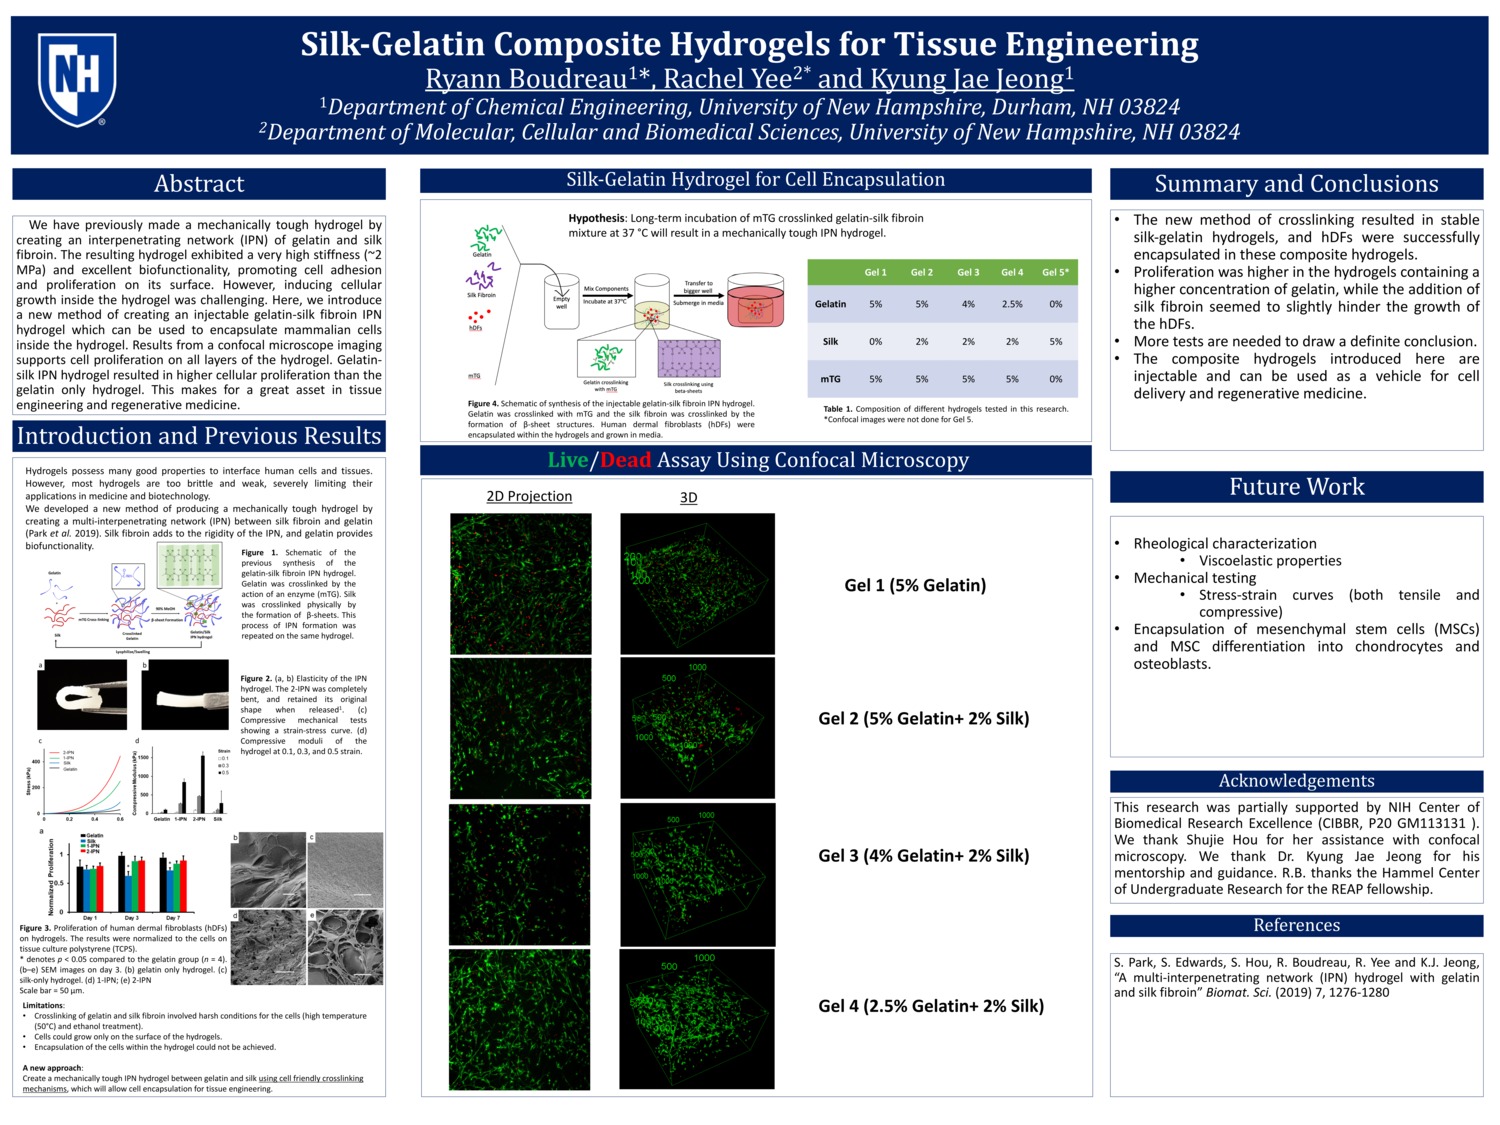 Silk-Gelatin Composite Hydrogels For Tissue Engineering by rdb1016